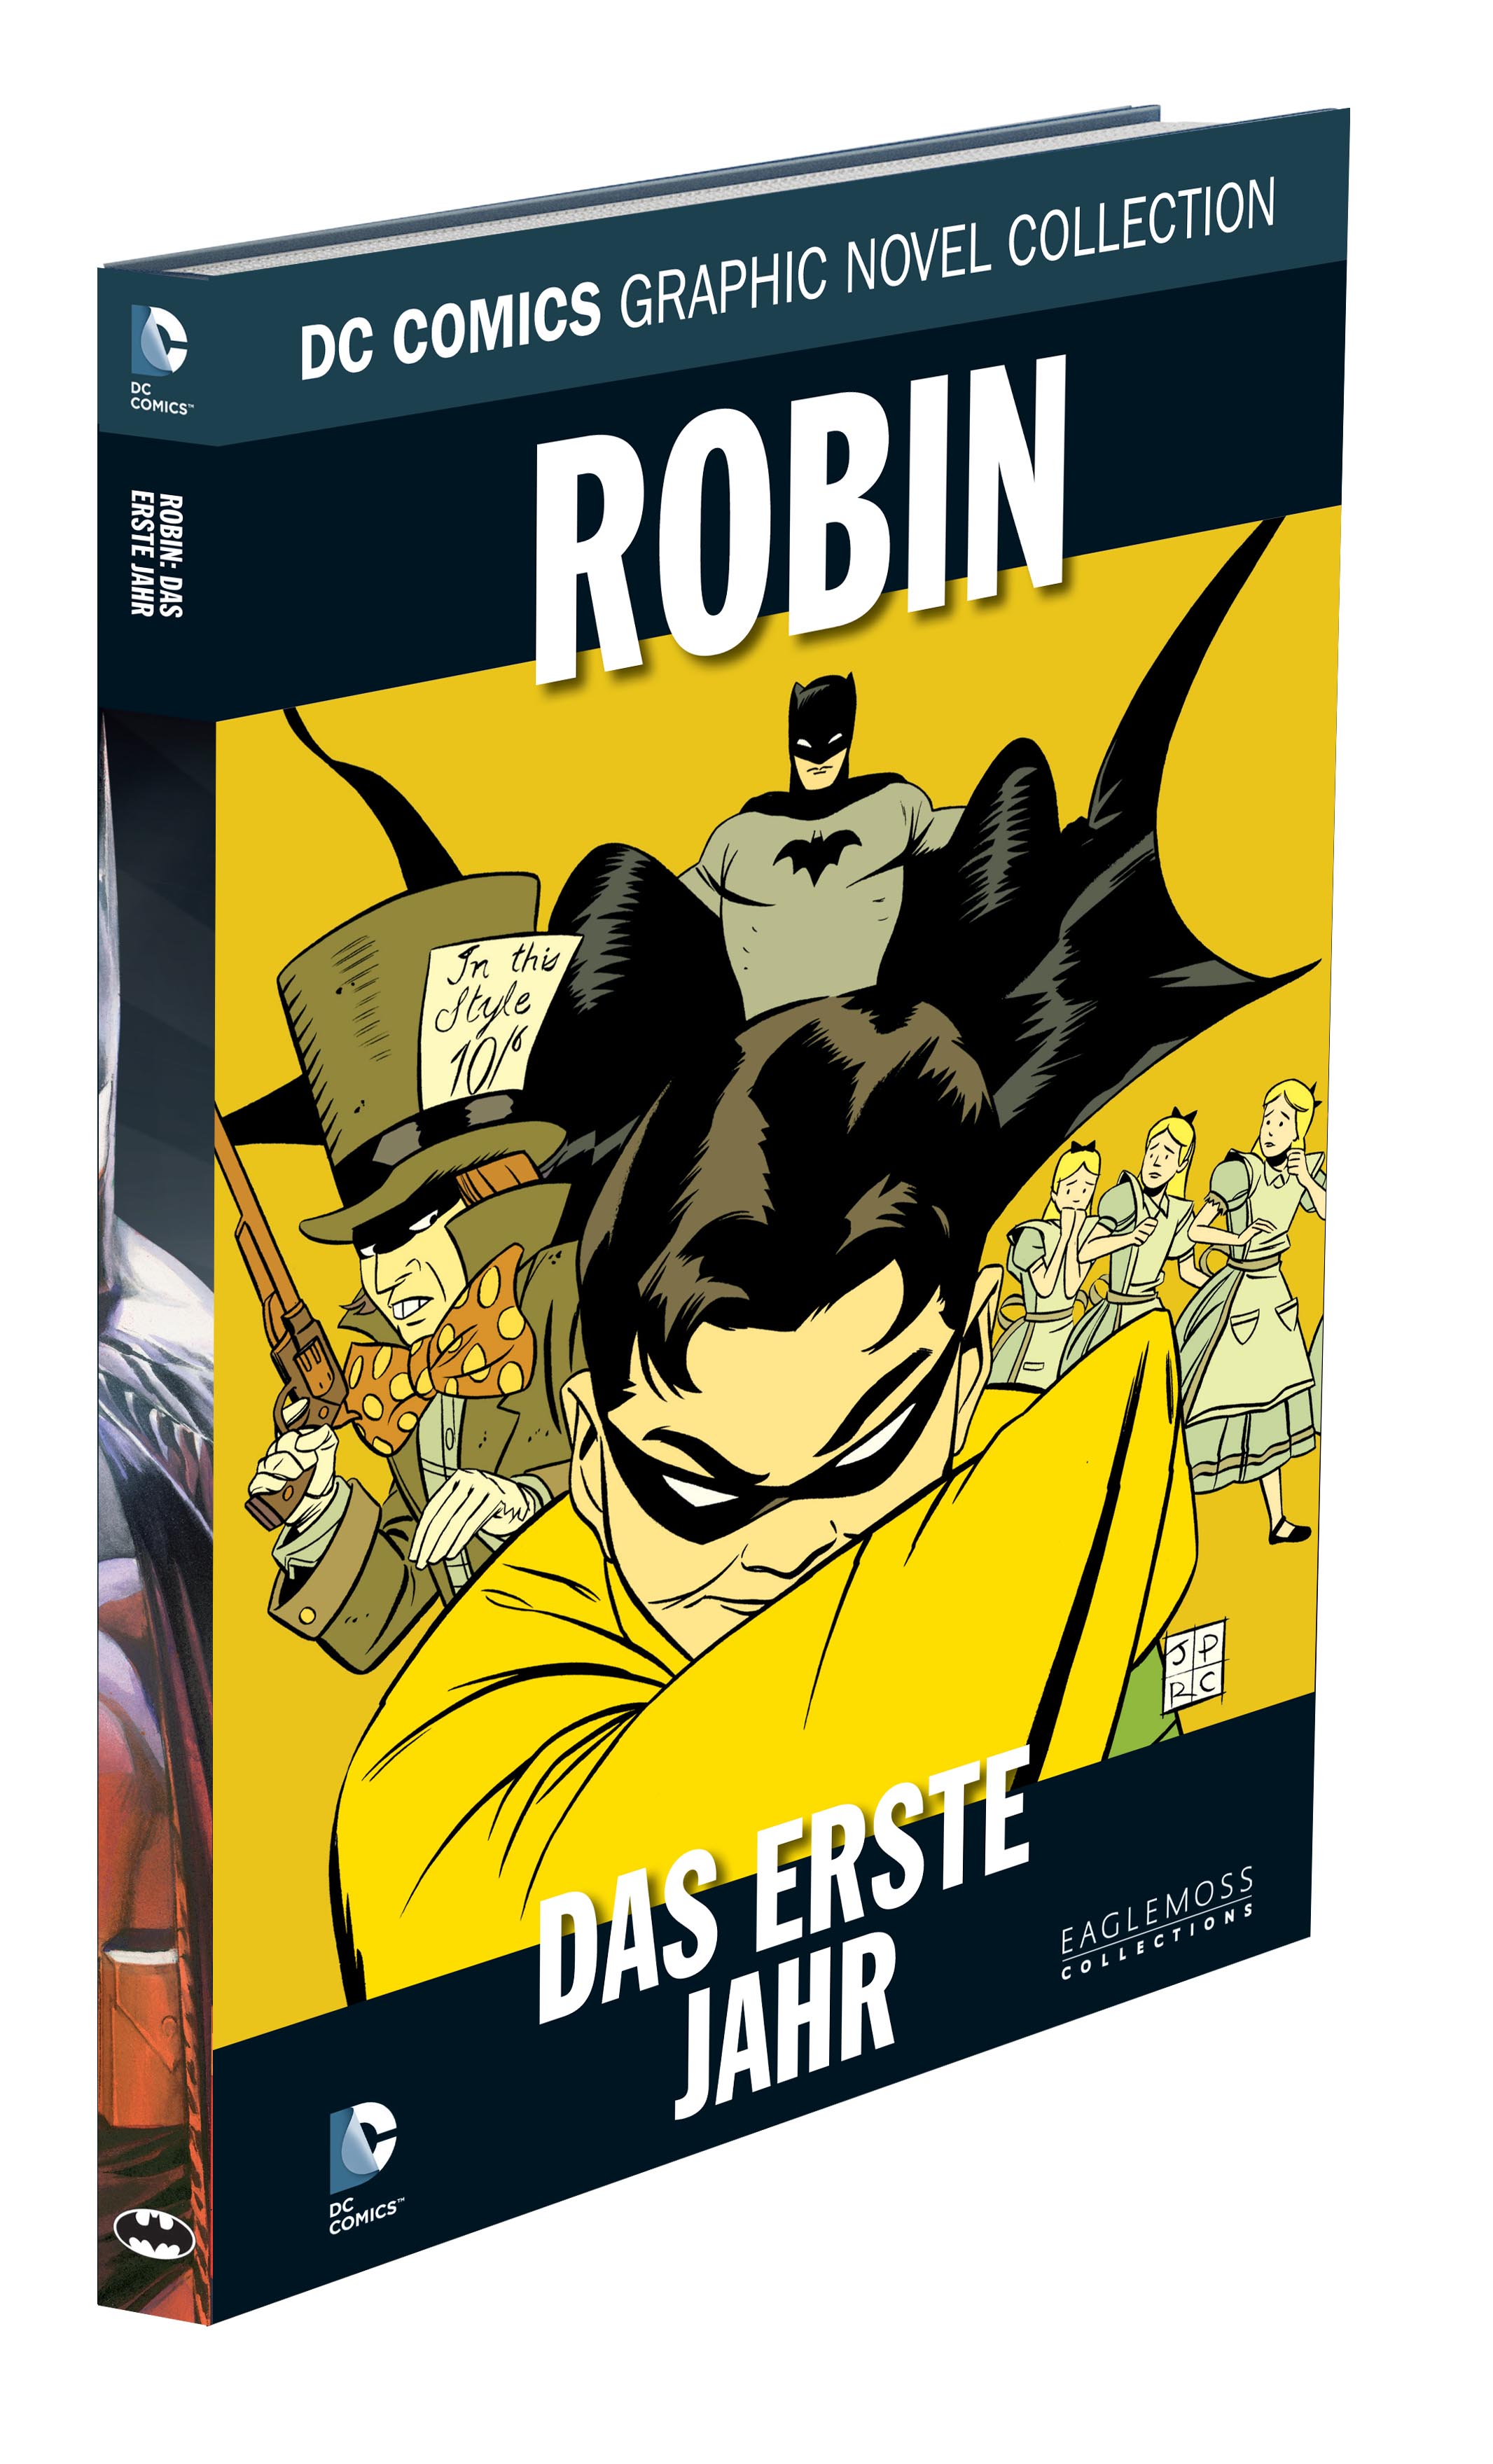 DC Comics Graphic Novel Collection Robin - Das erste Jahr